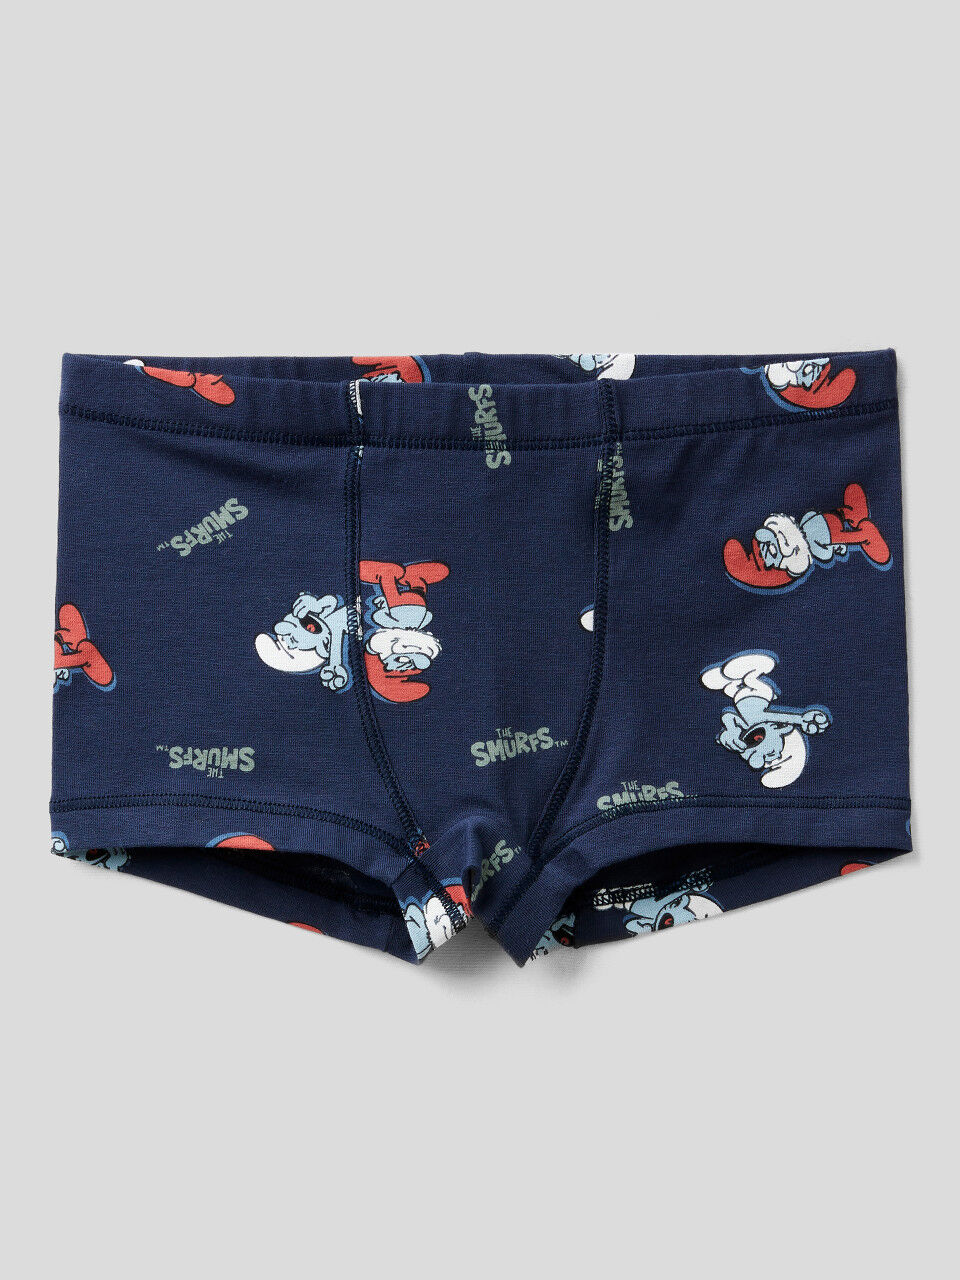 Smurfs boxers